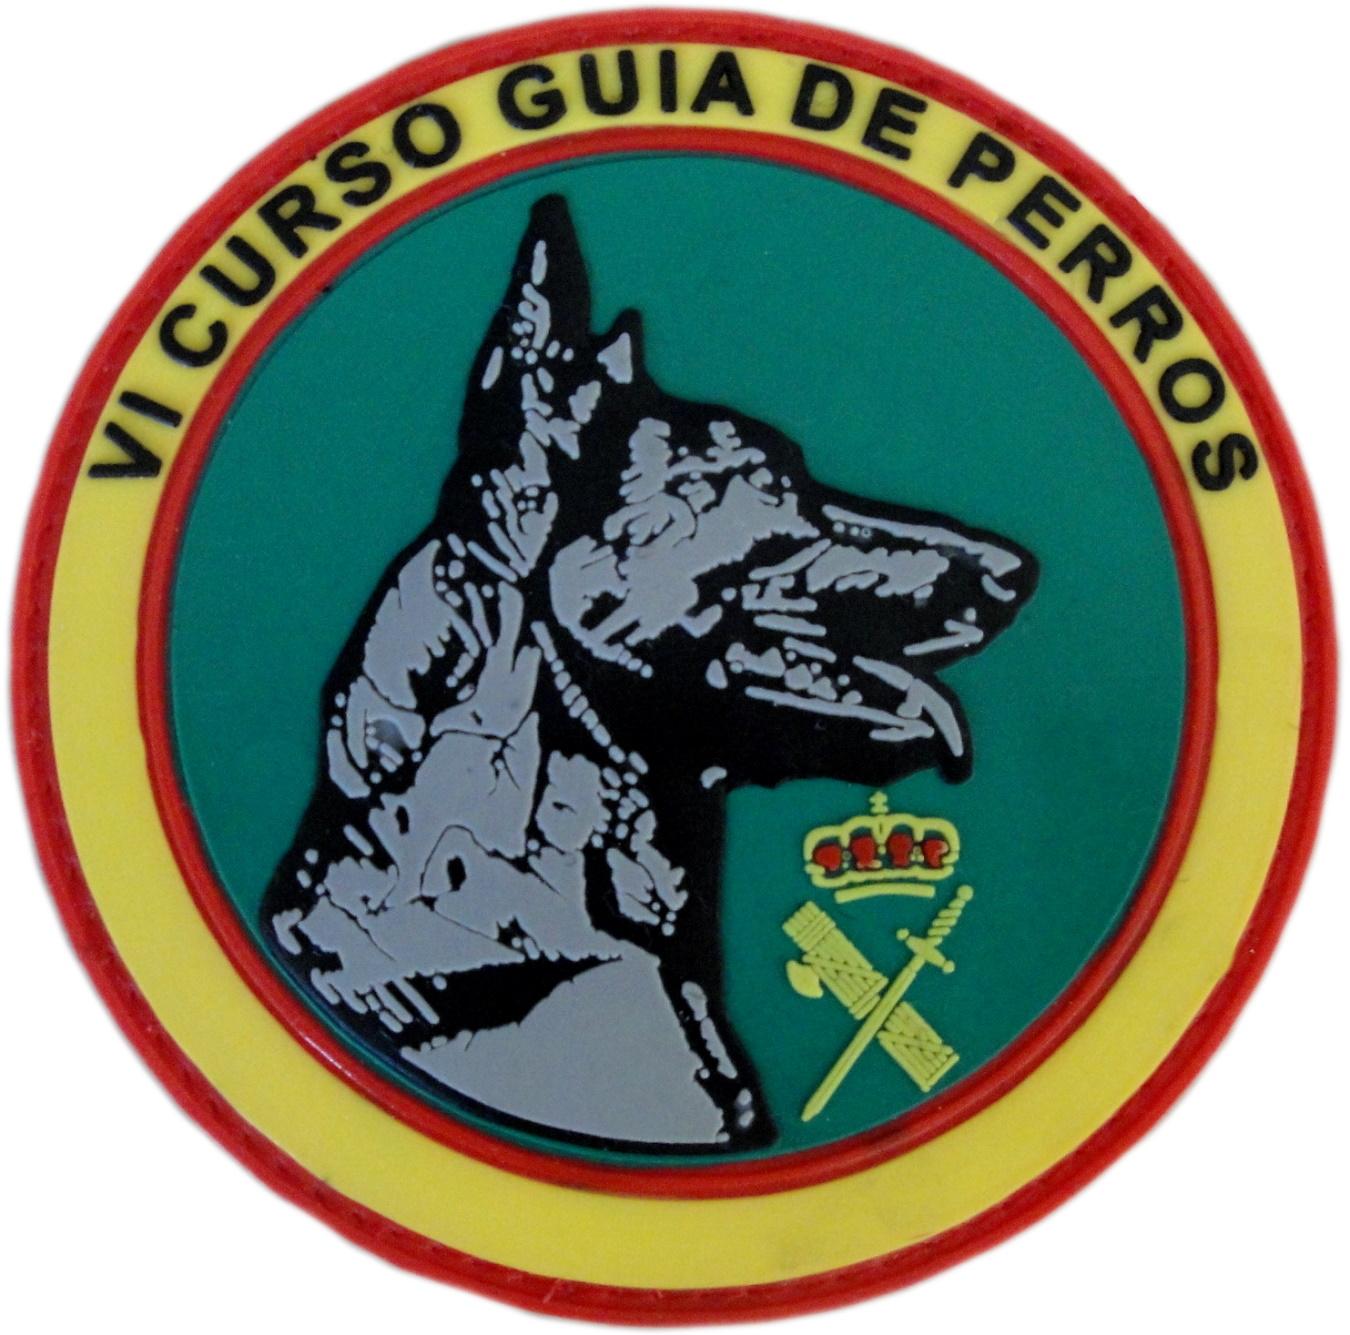 Guardia civil VI Curso guía de perros k-9 parche insignia emblema distintivo 